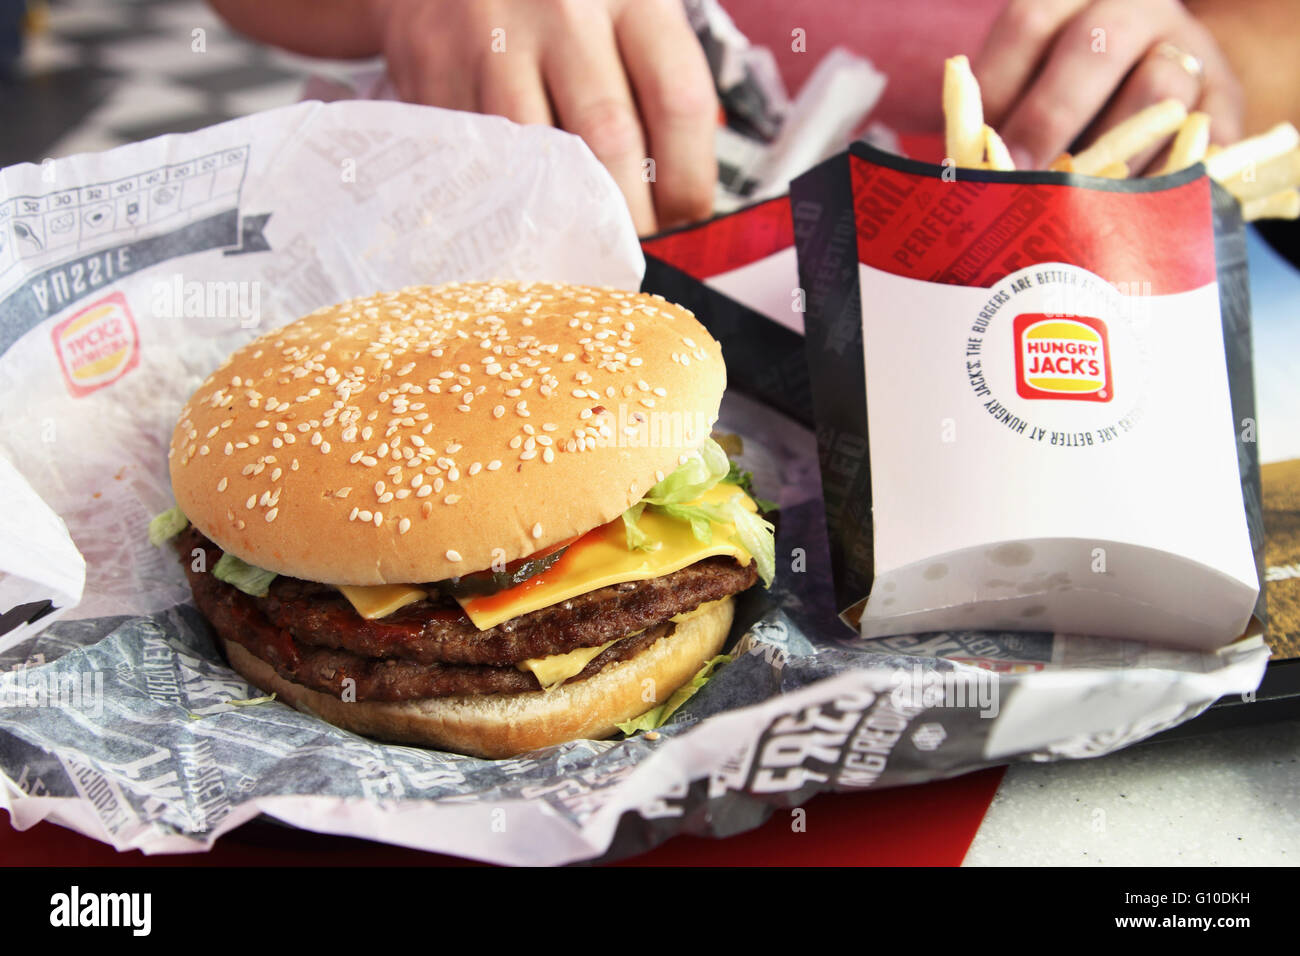 Hungry Jack's (Burger King) fast food burger de boeuf Banque D'Images